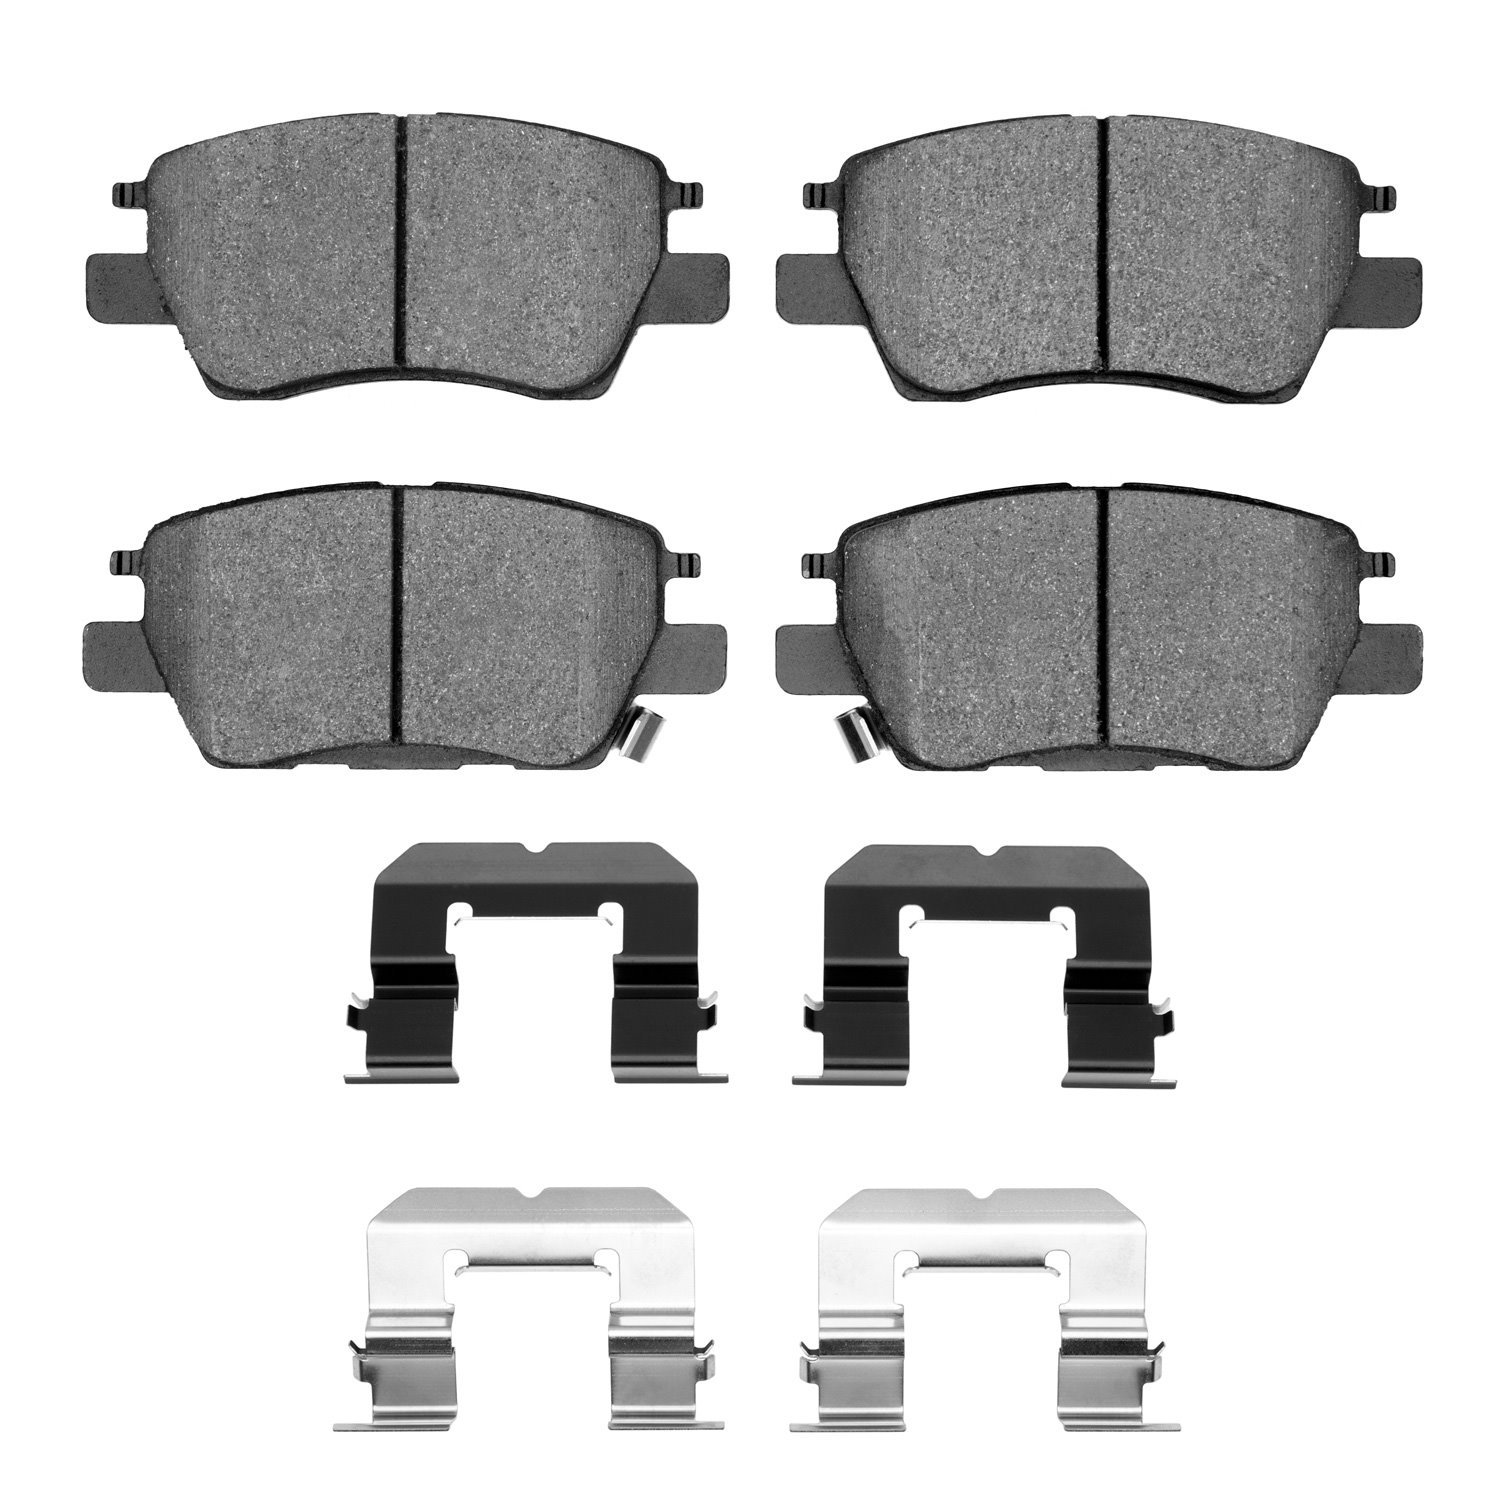 1551-1844-01 5000 Advanced Ceramic Brake Pads & Hardware Kit, Fits Select GM, Position: Front